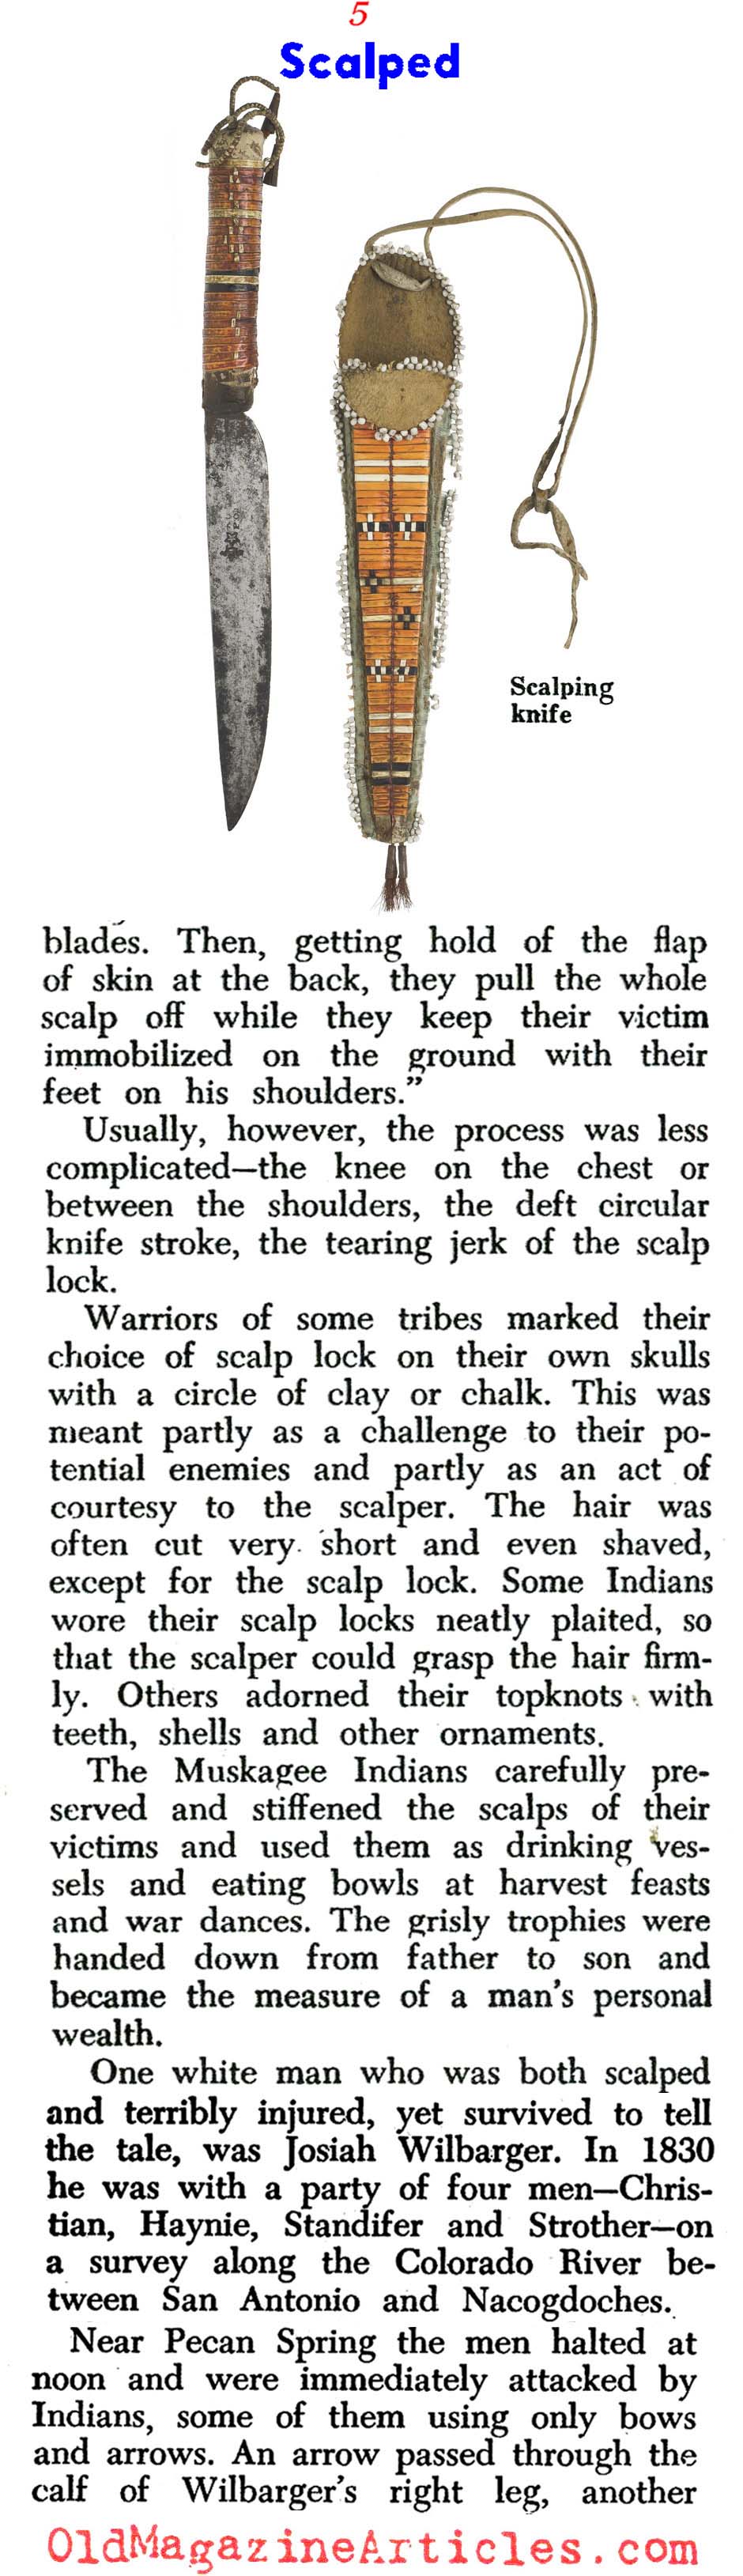 Scalping: An Anglo-Saxon Practice (Sir! Magazine, 1961)